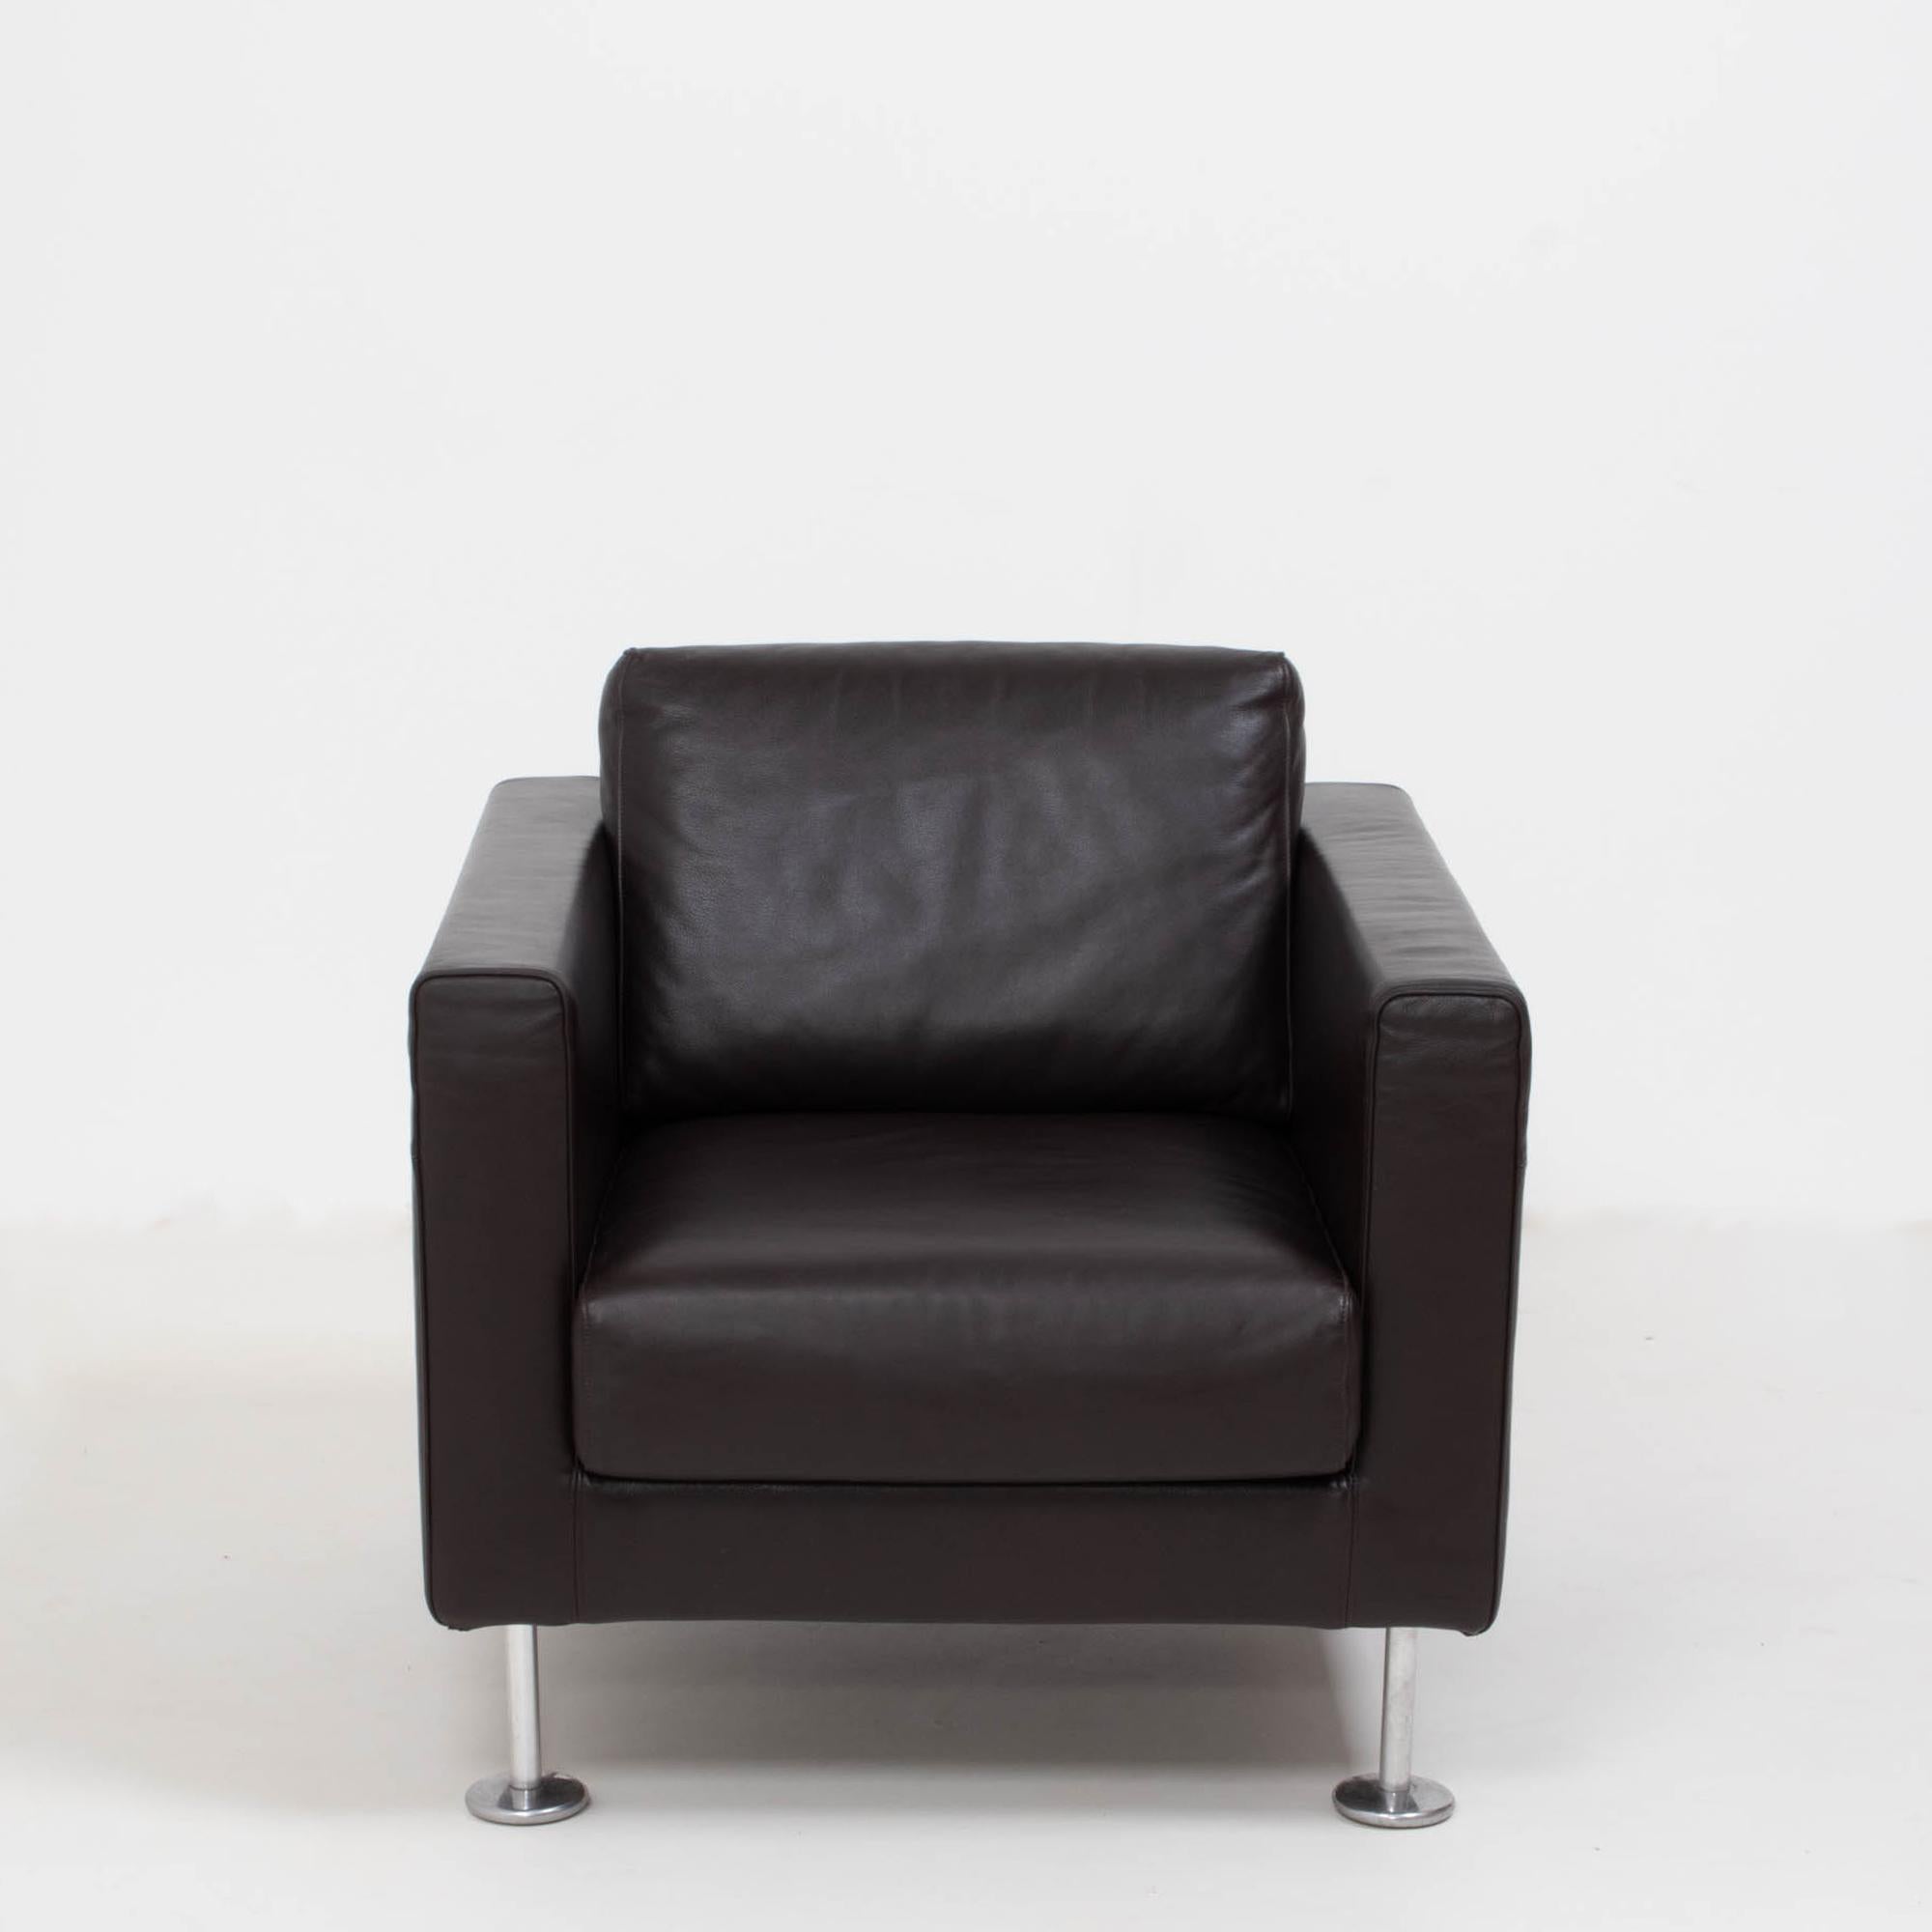 German Vitra Jasper Morrison Park Leather Armchairs, Set of 2 For Sale